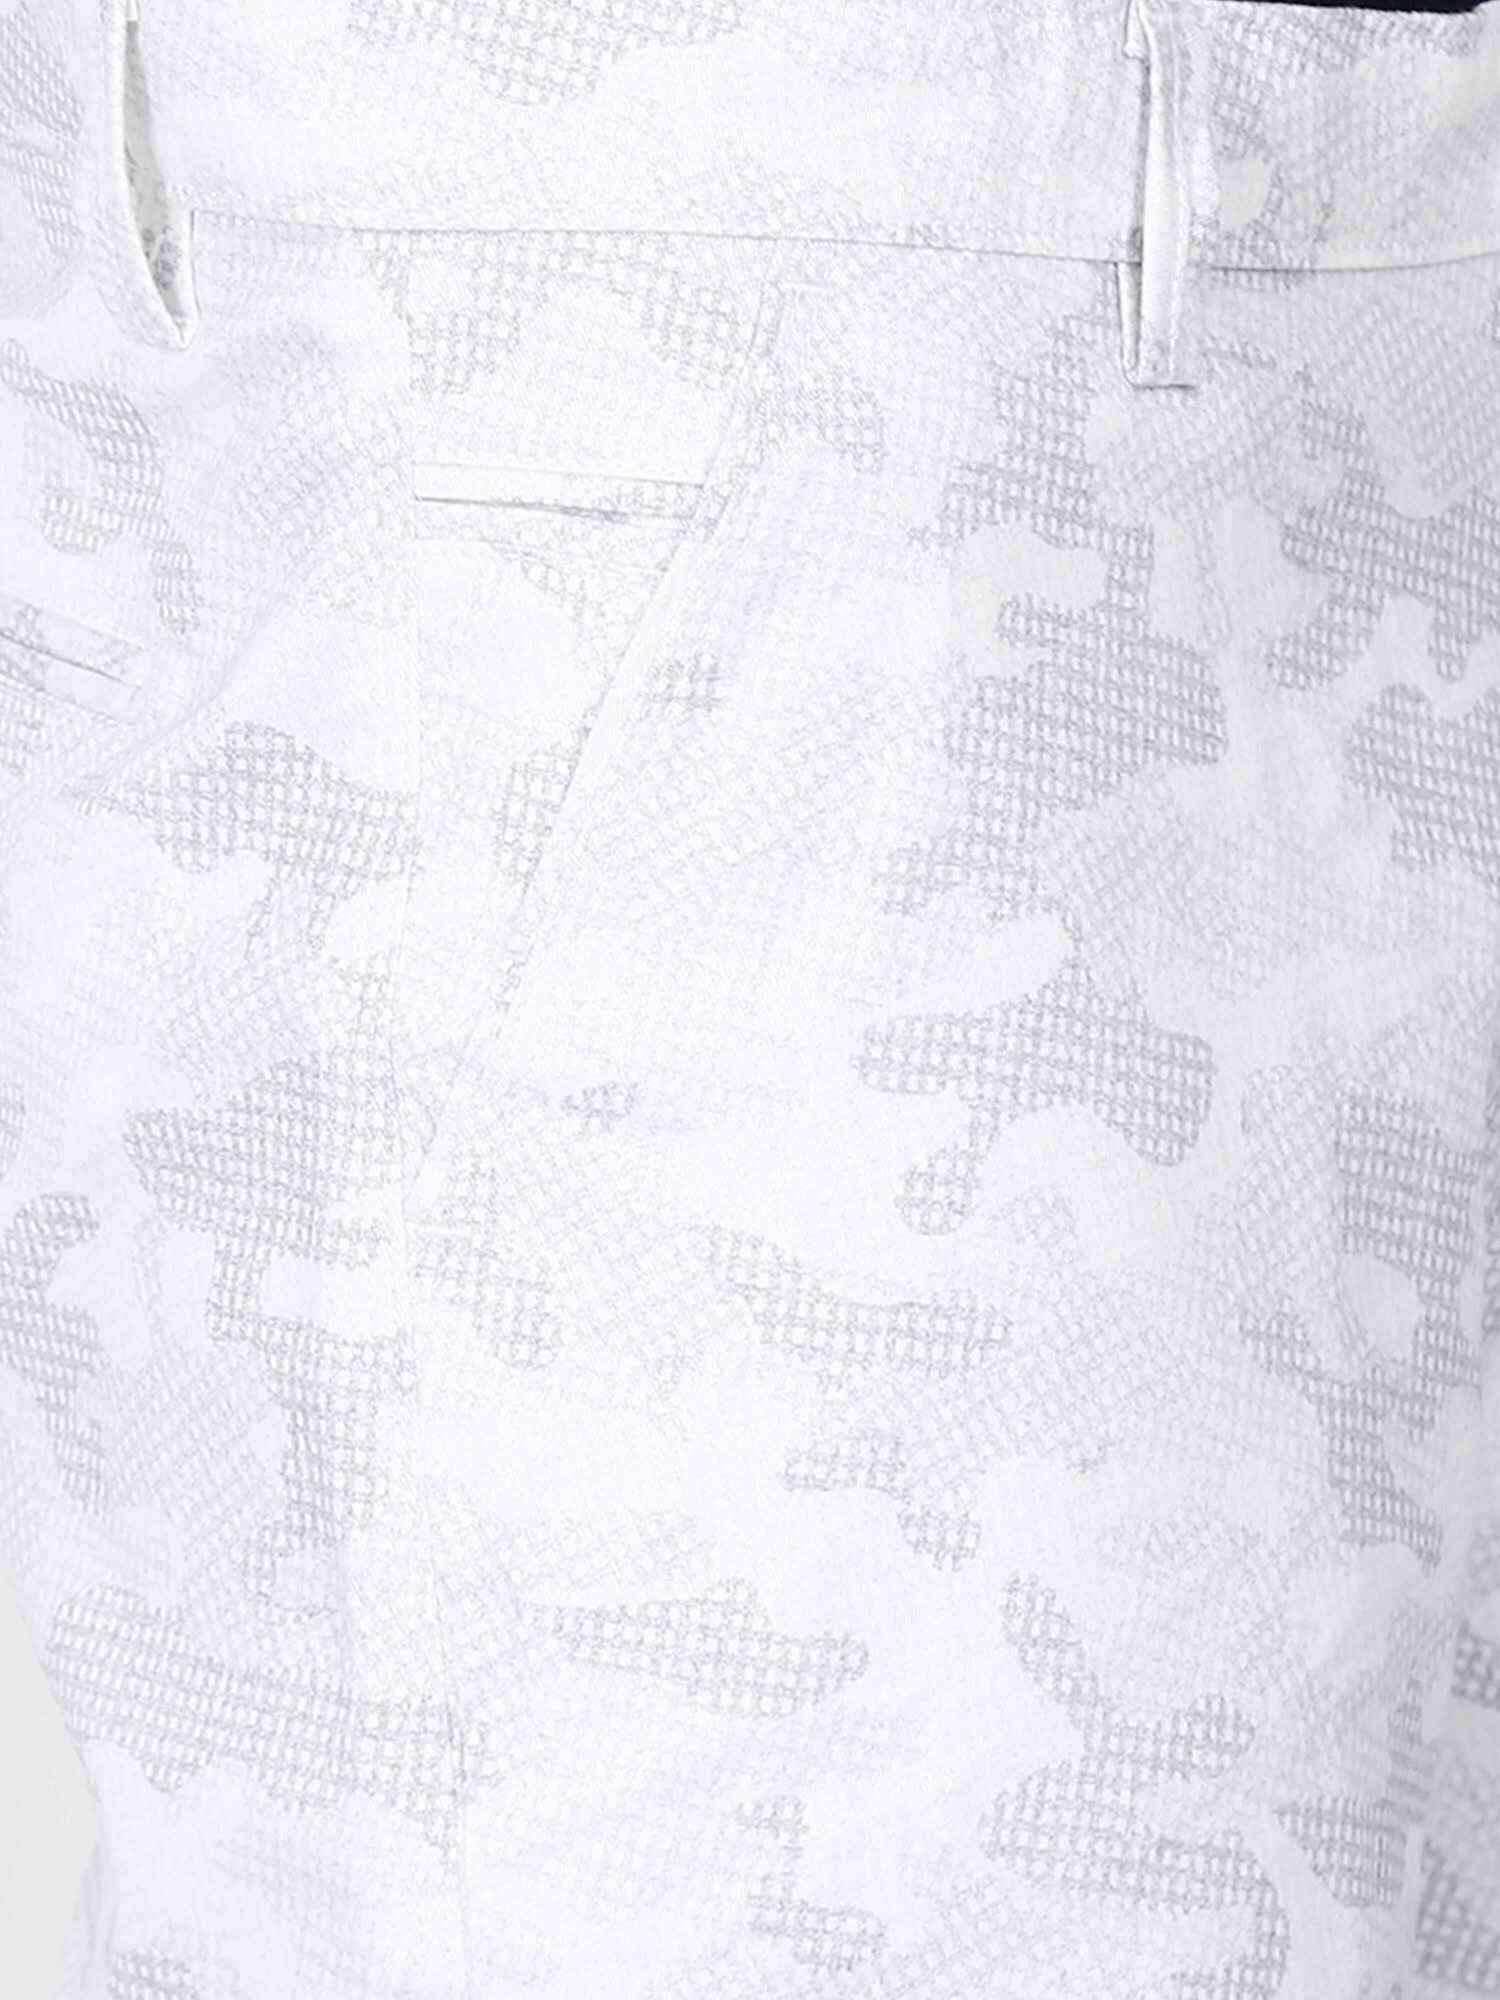 Elijaj Men White Camouflage Printed Shorts - Guniaa Fashions